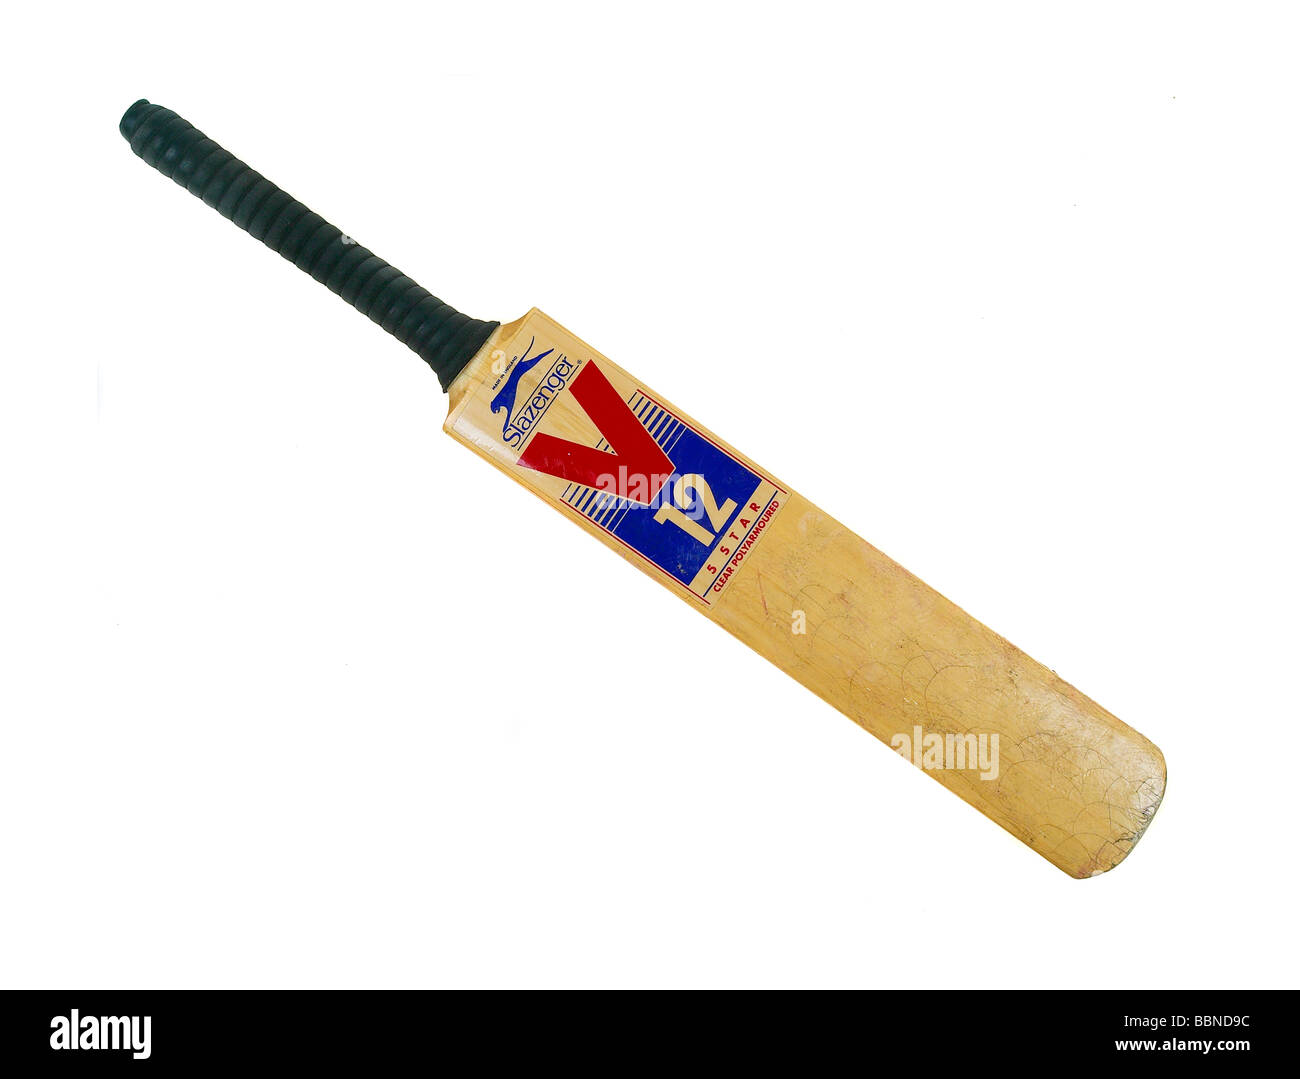 cricket-bat-BBND9C.jpg